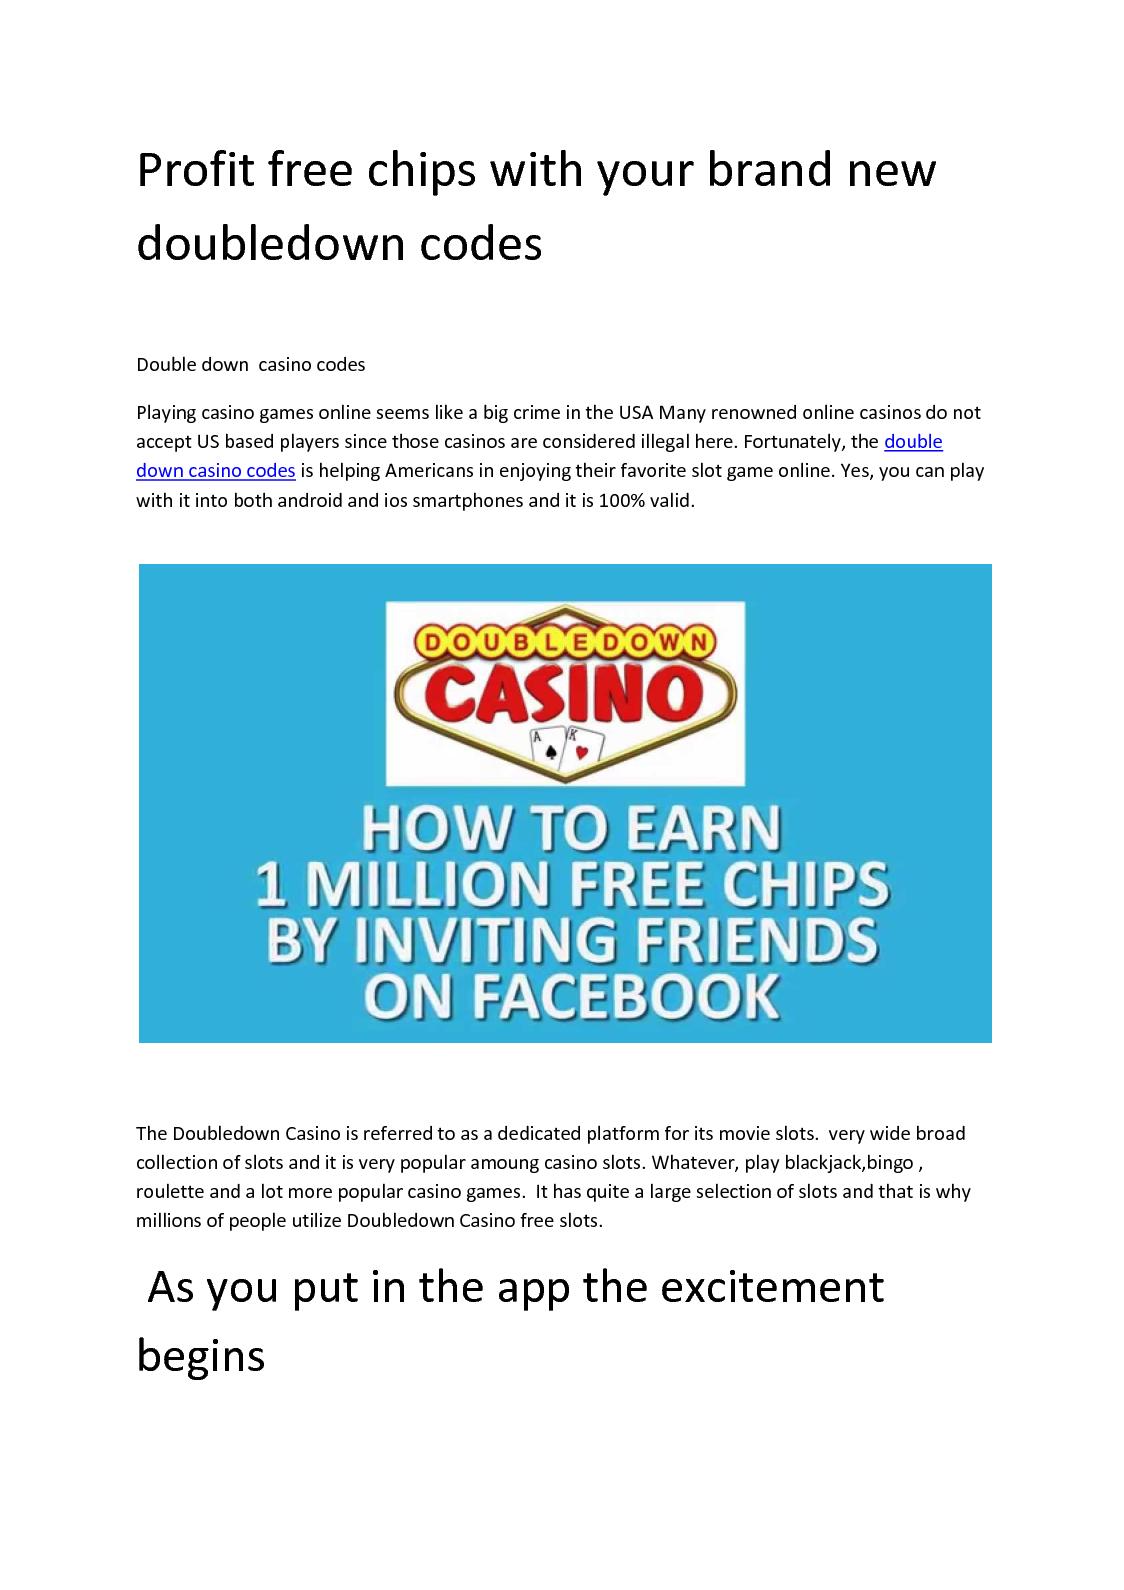 Double down casino 1.5 free